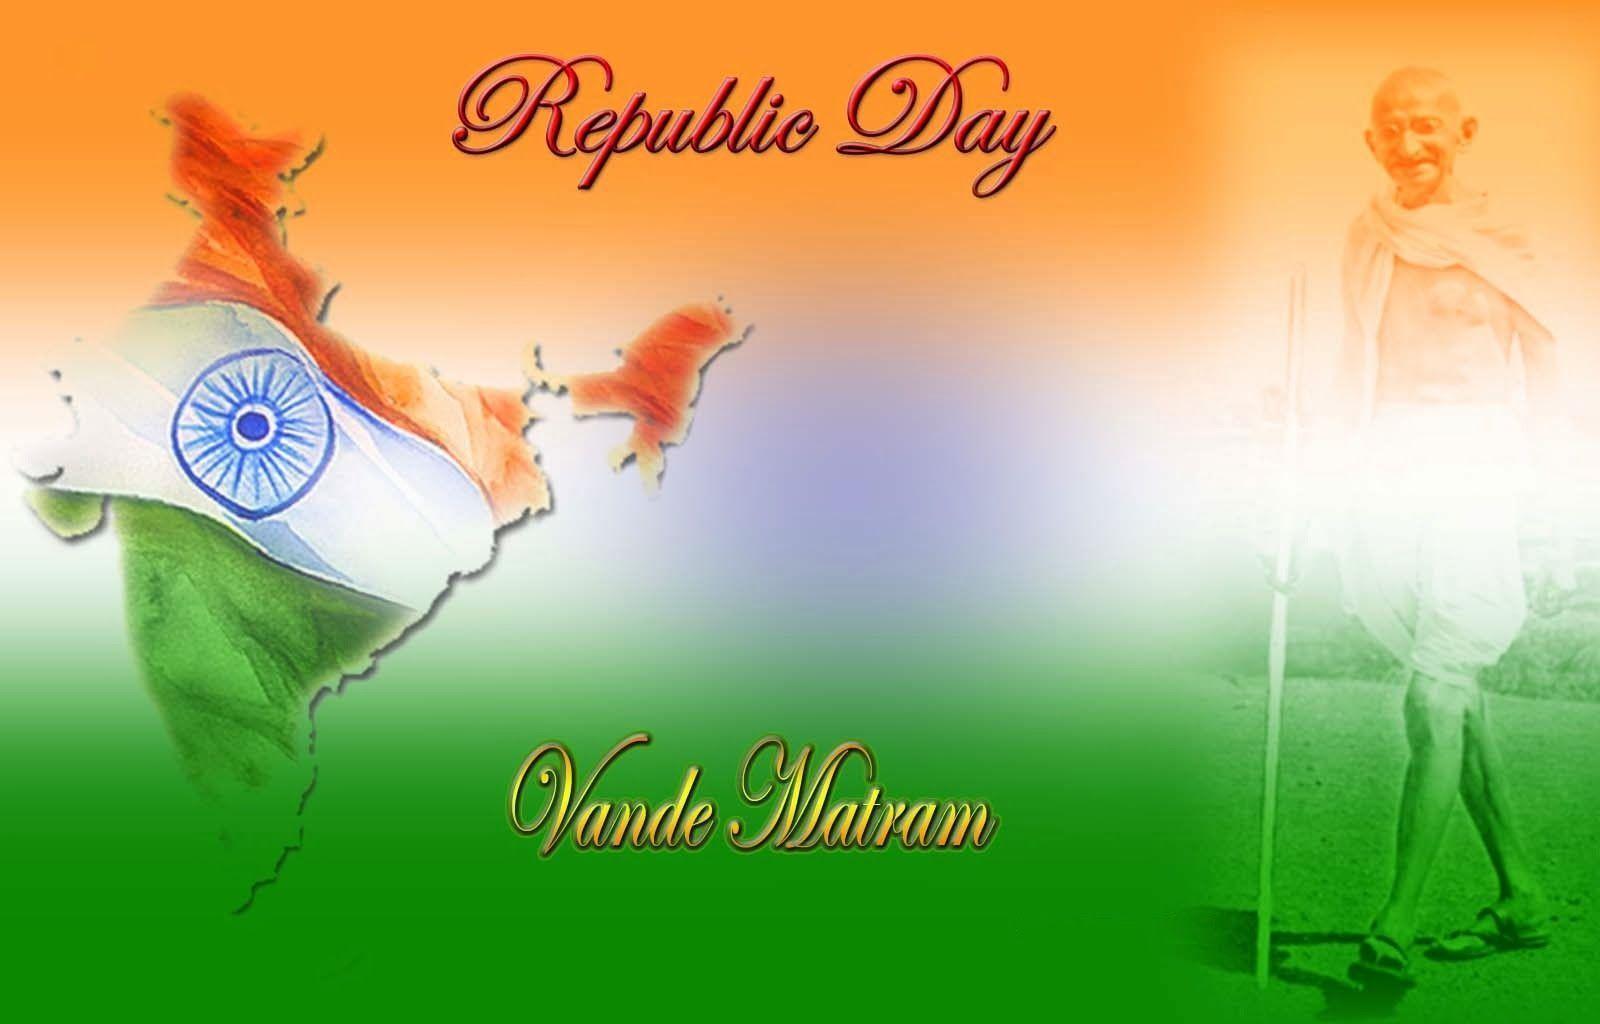 Tiranga Republic Day Download Wallpaper